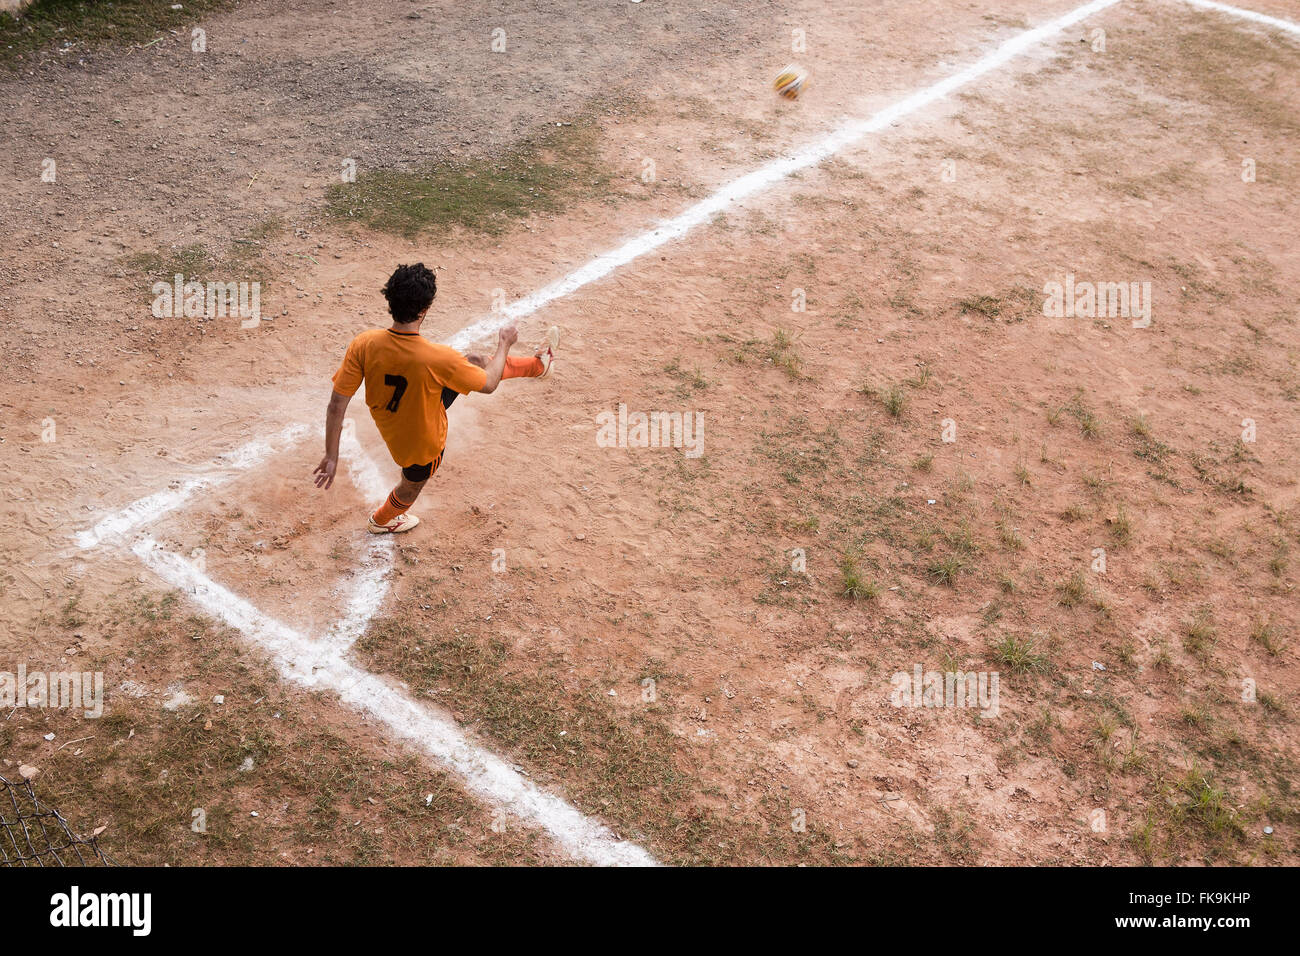 Soccer player kicking the ball in floodplain corner kick Stock Photo